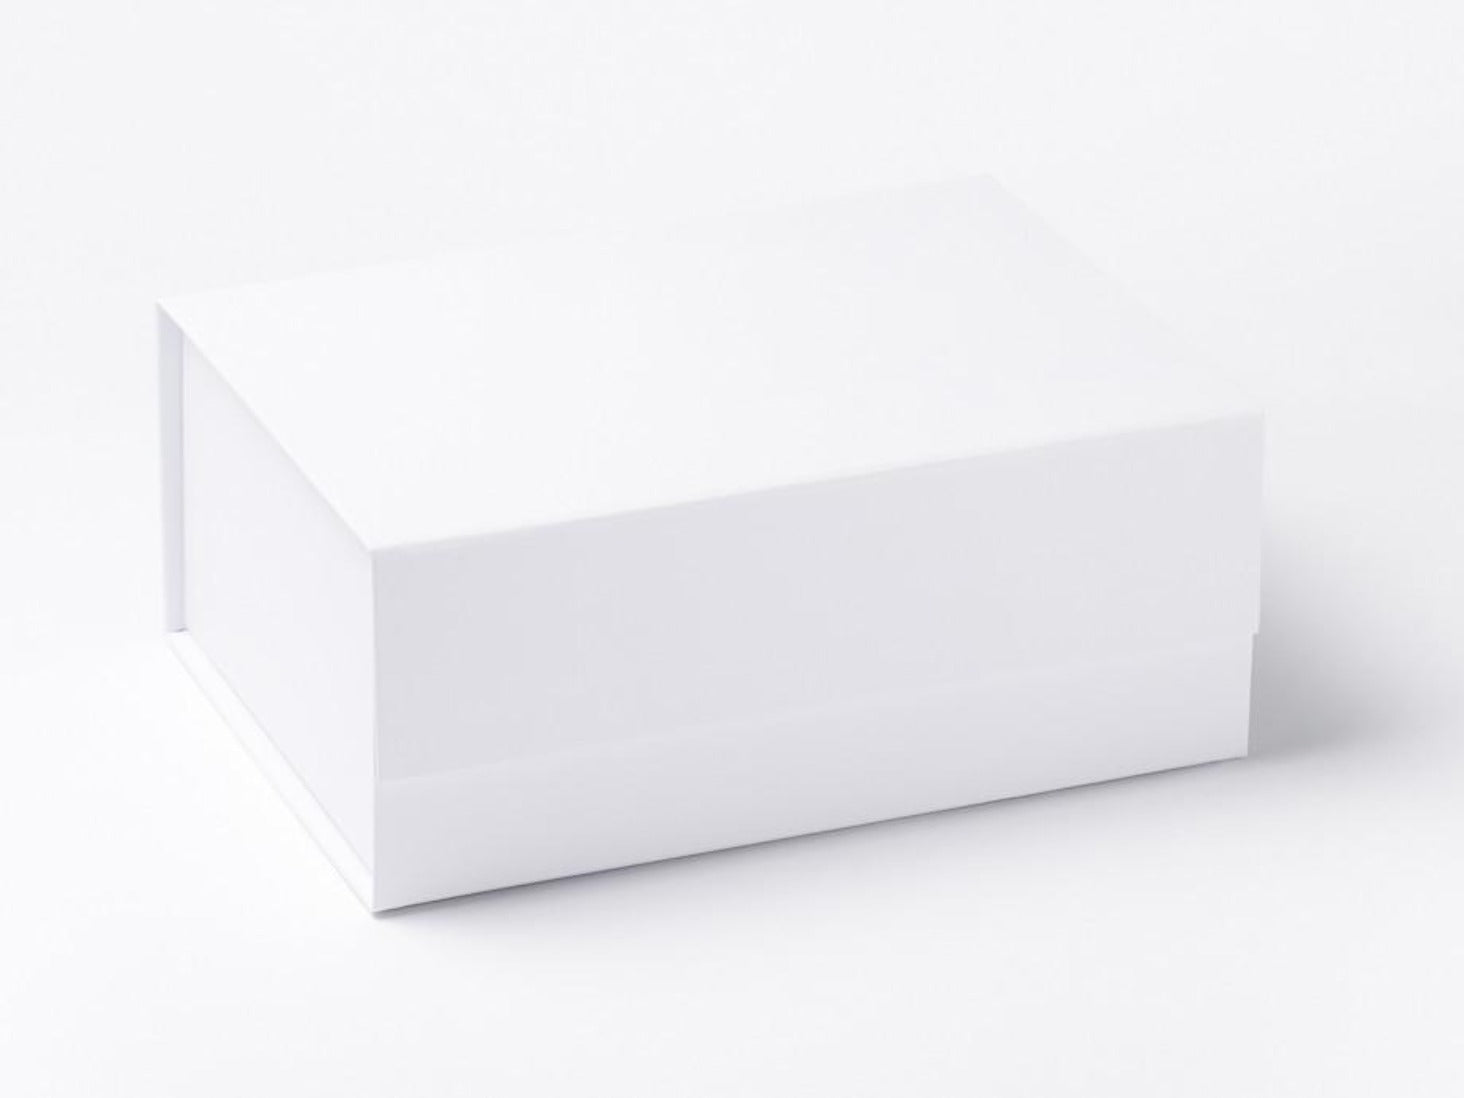  White A5 Deep folding Gift Hamper Box from Foldabox USA